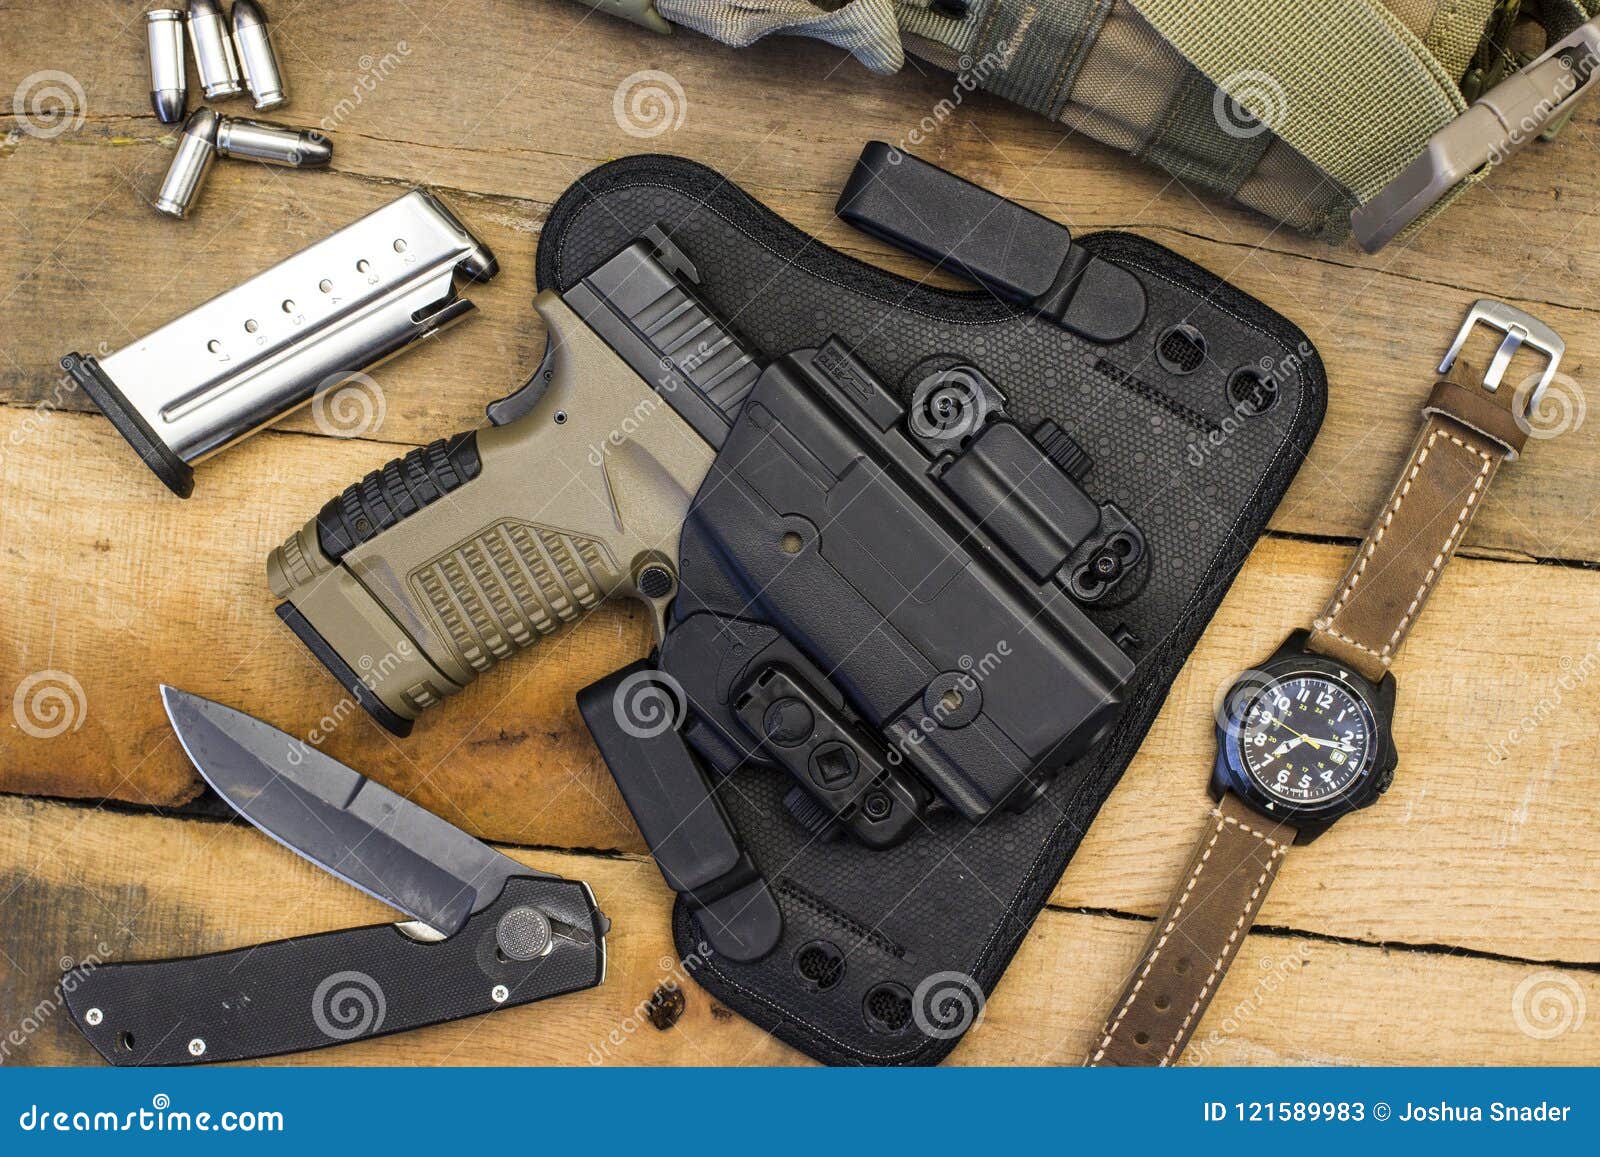 tactical handgun and gear including watch, bullets, knife, holster, bag